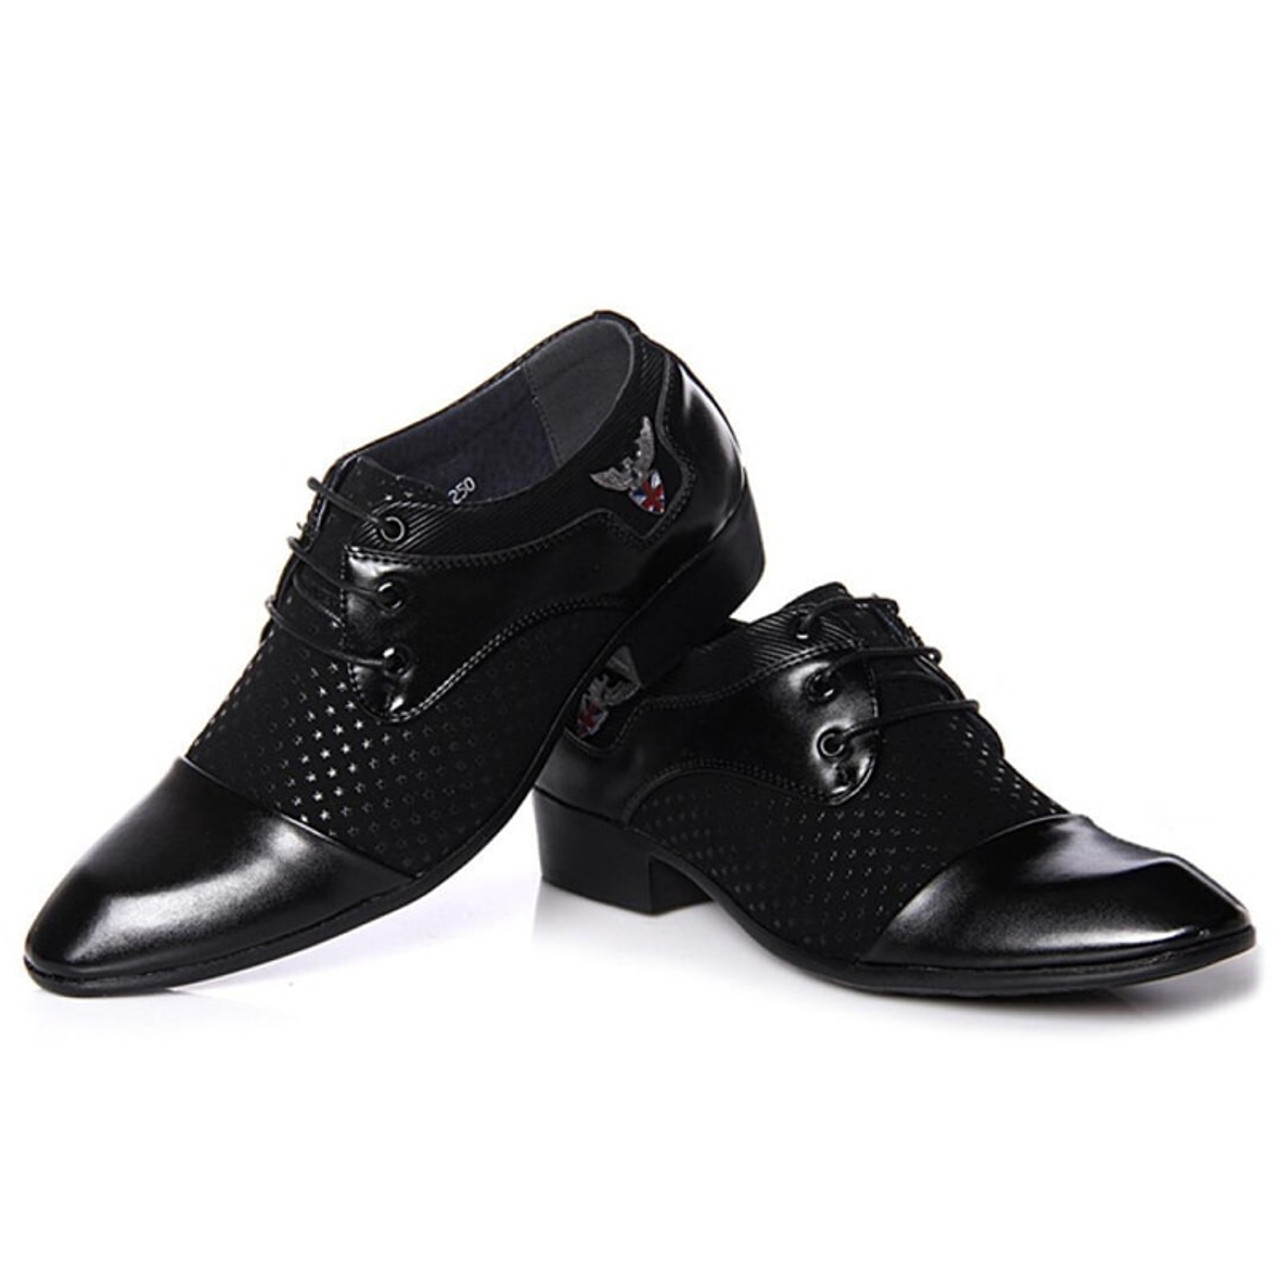 black dress shoes for wedding